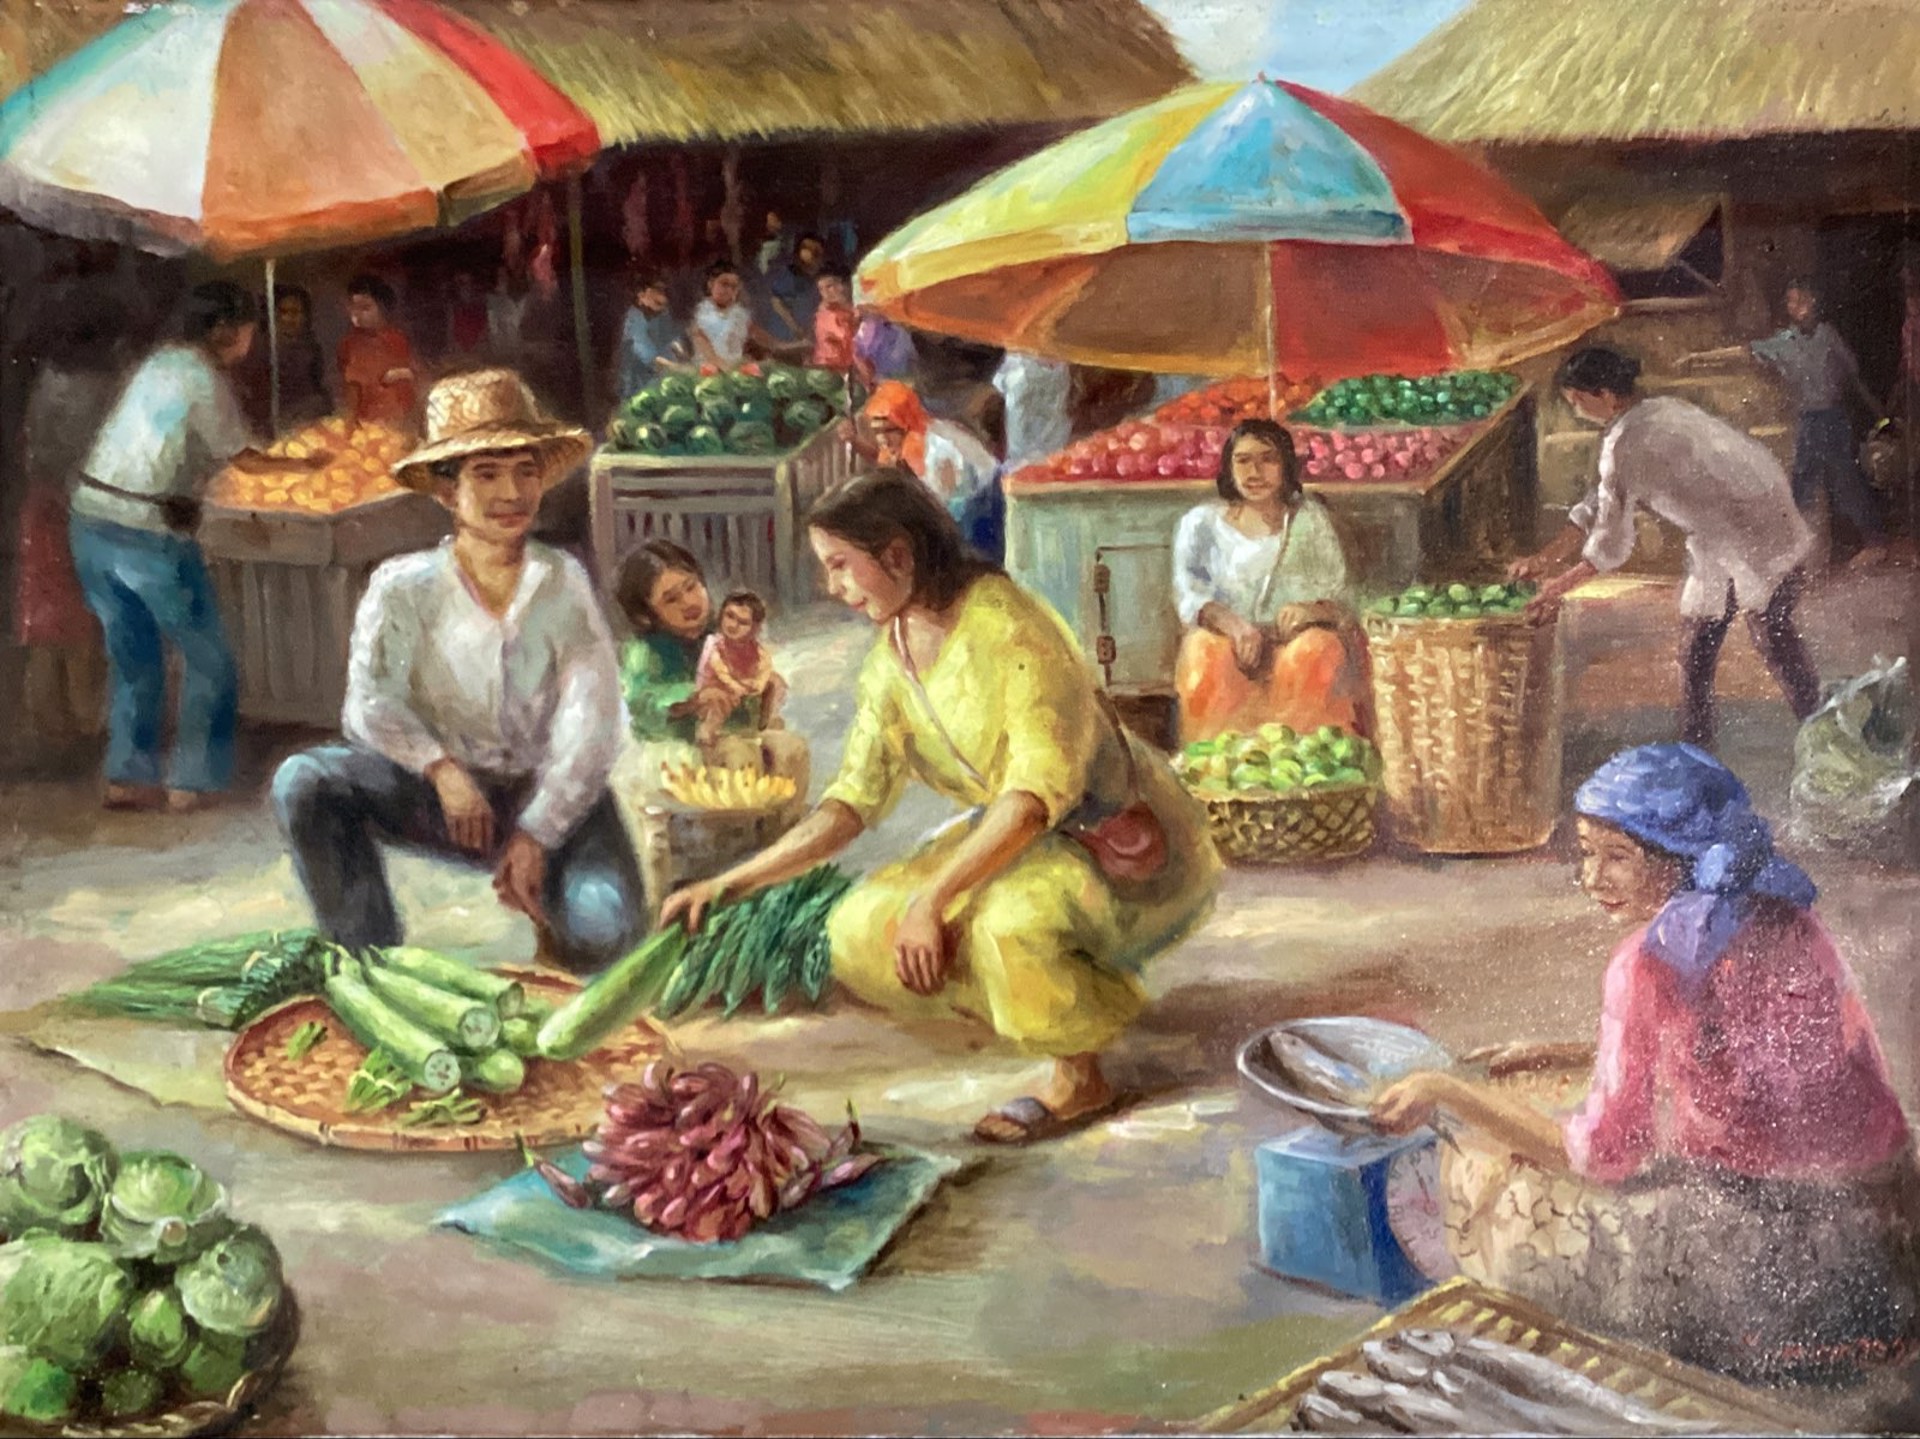 Tabo Market by Jonathan Benjo Y. Manigo